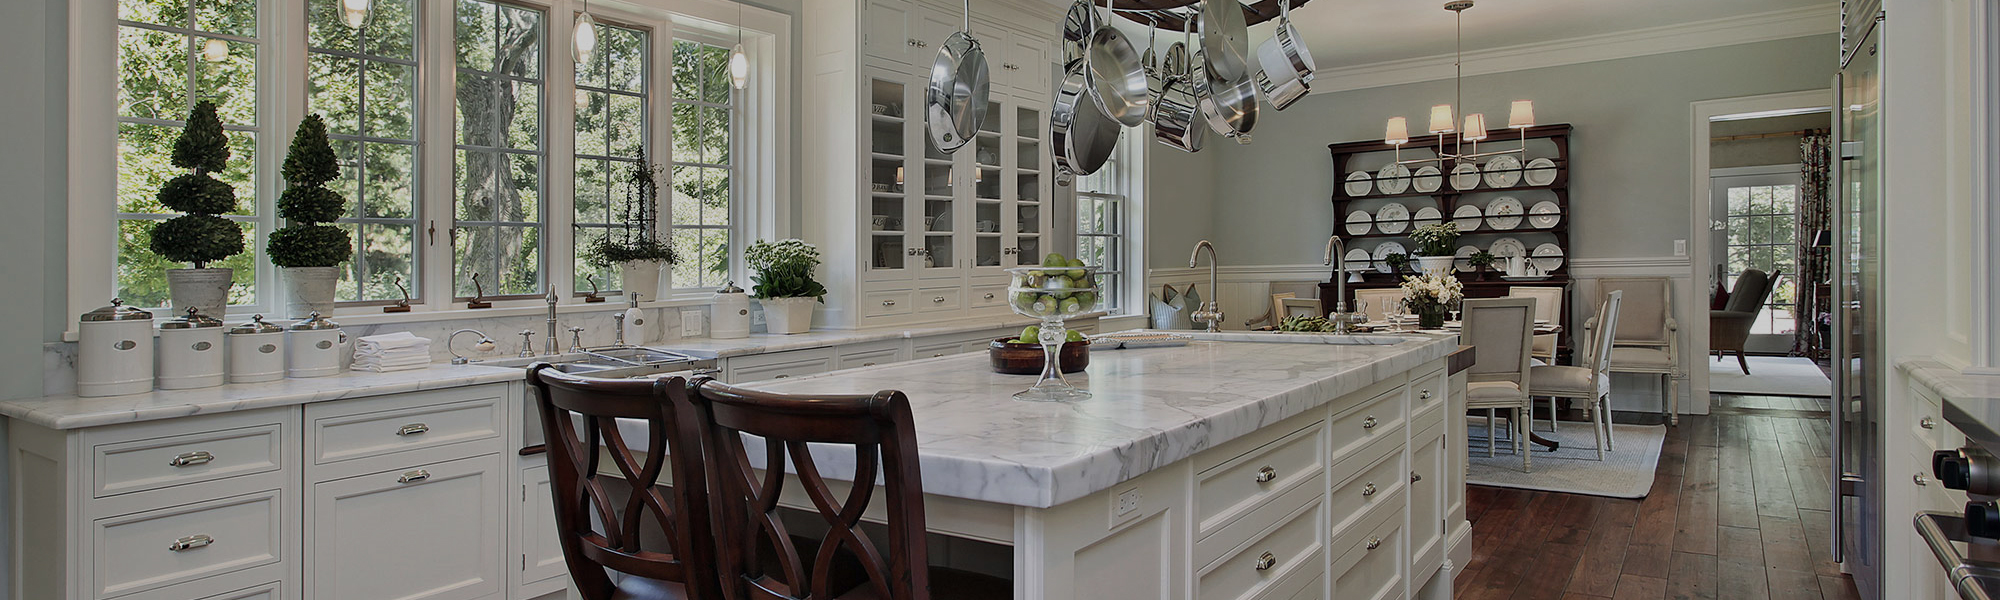 Custom Cabinetry And Kitchen Design Granite Countertops In